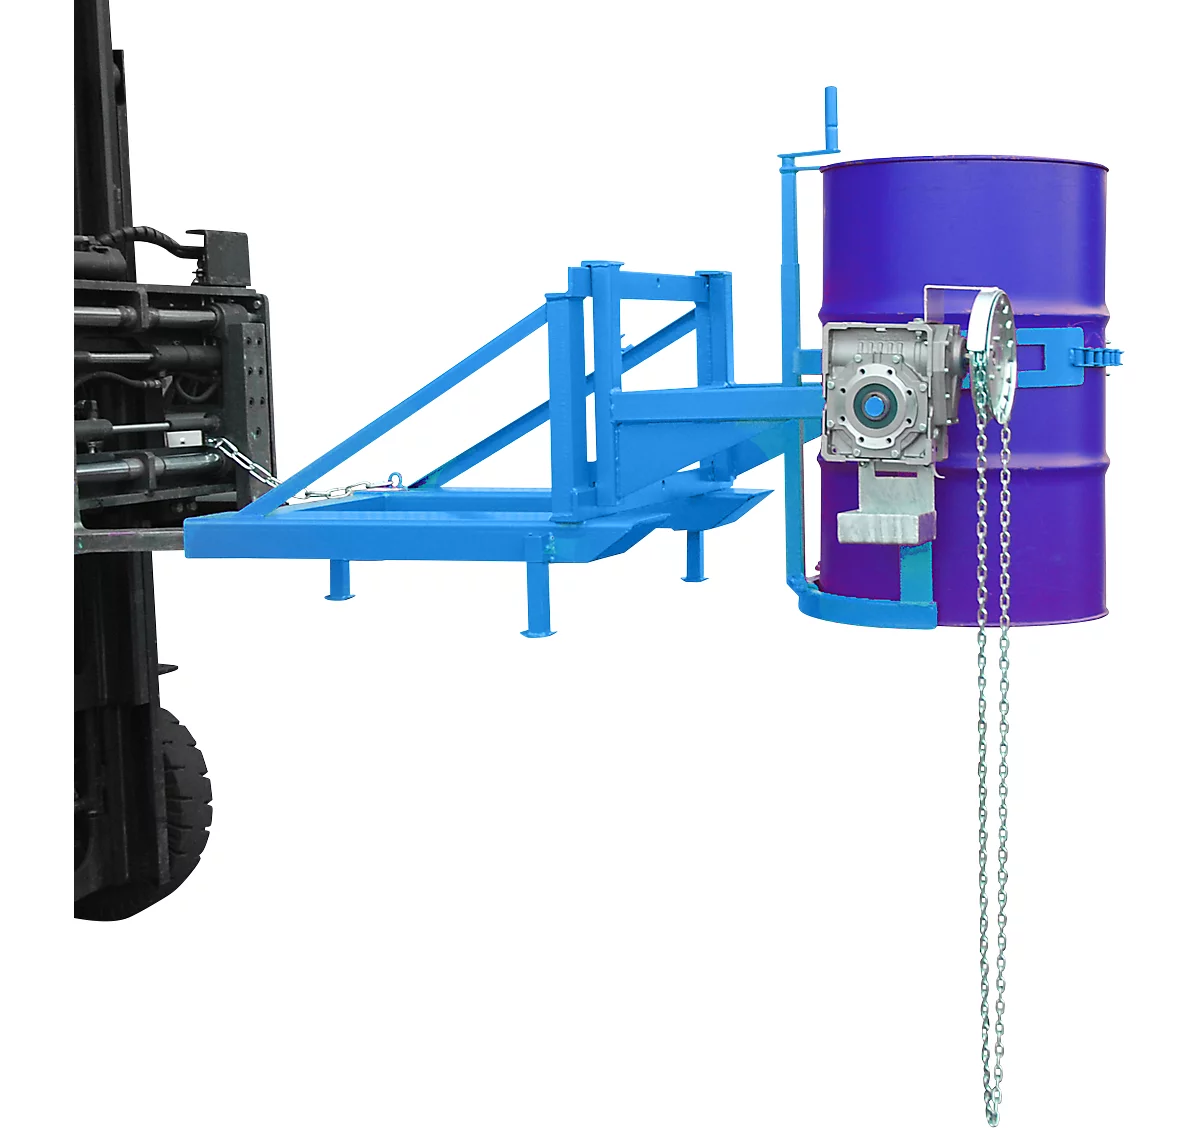 Volteador de barriles Bauer tipo FD/L, para barriles de 110 a 220 l, 360 kg, basculación de 270°, con cadena continua, alojamiento de apilador, azul luminoso RAL 5012